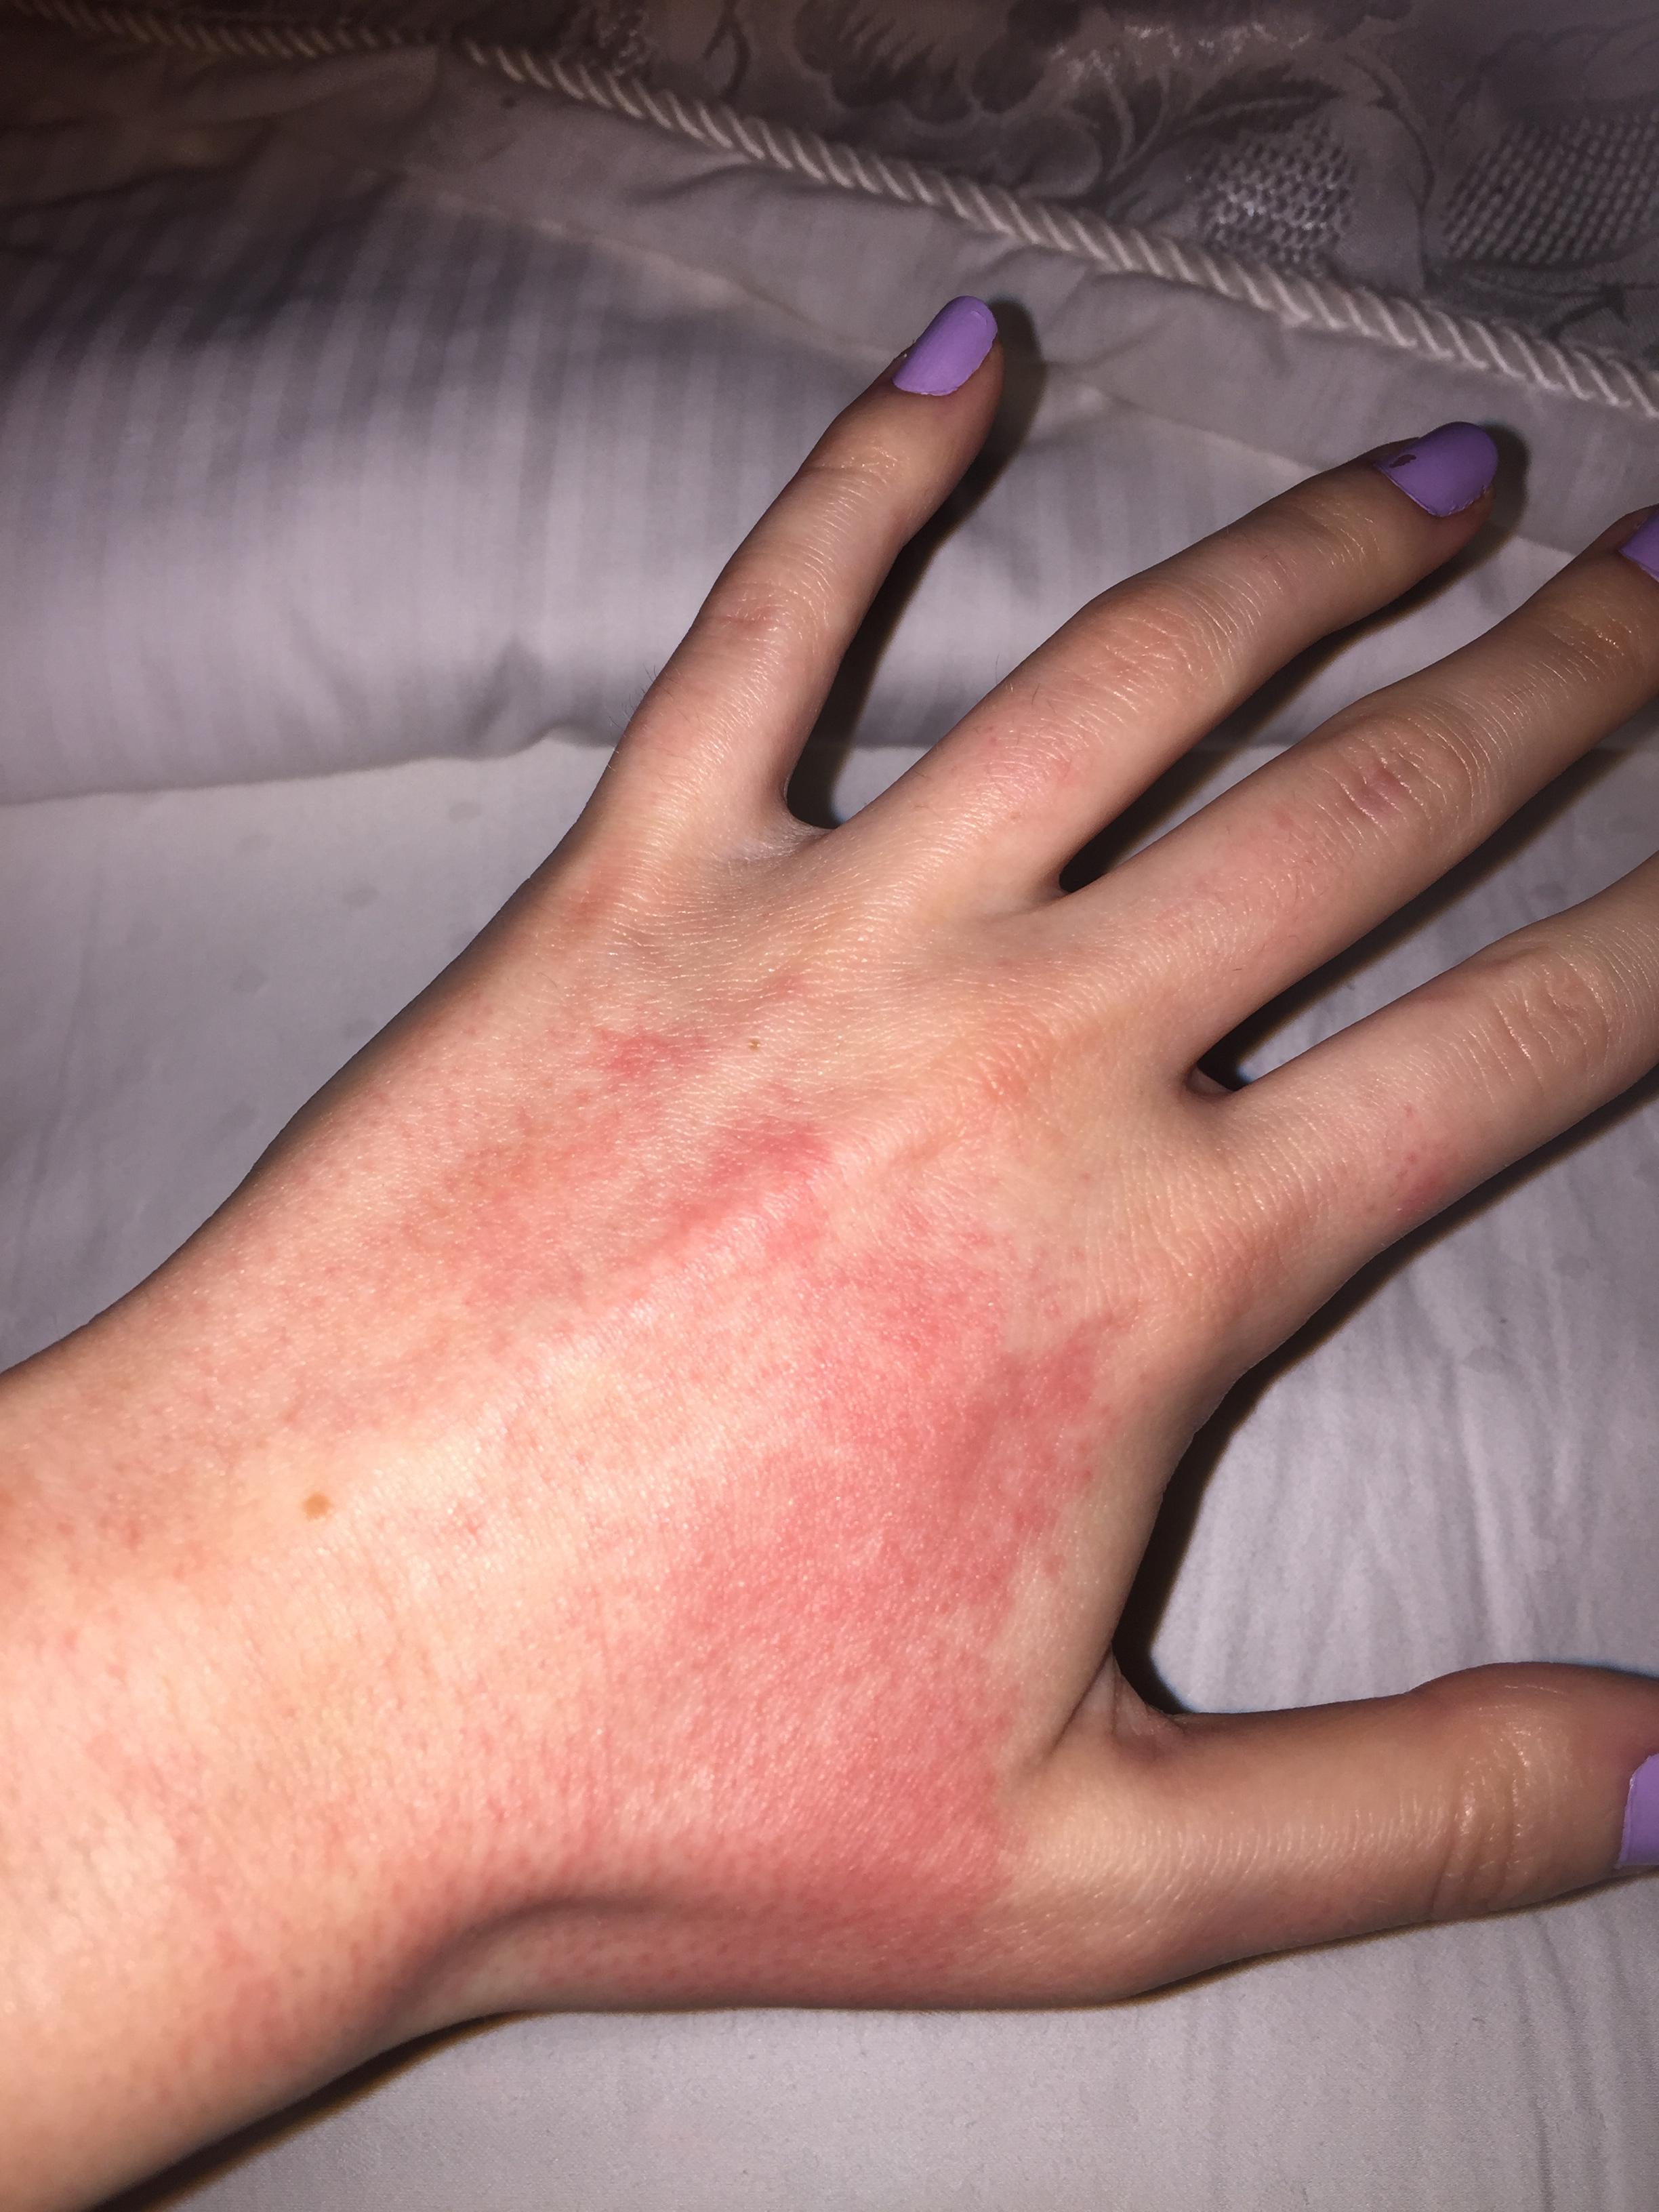 HELP! Rash on hands from Accutane? Prescription acne